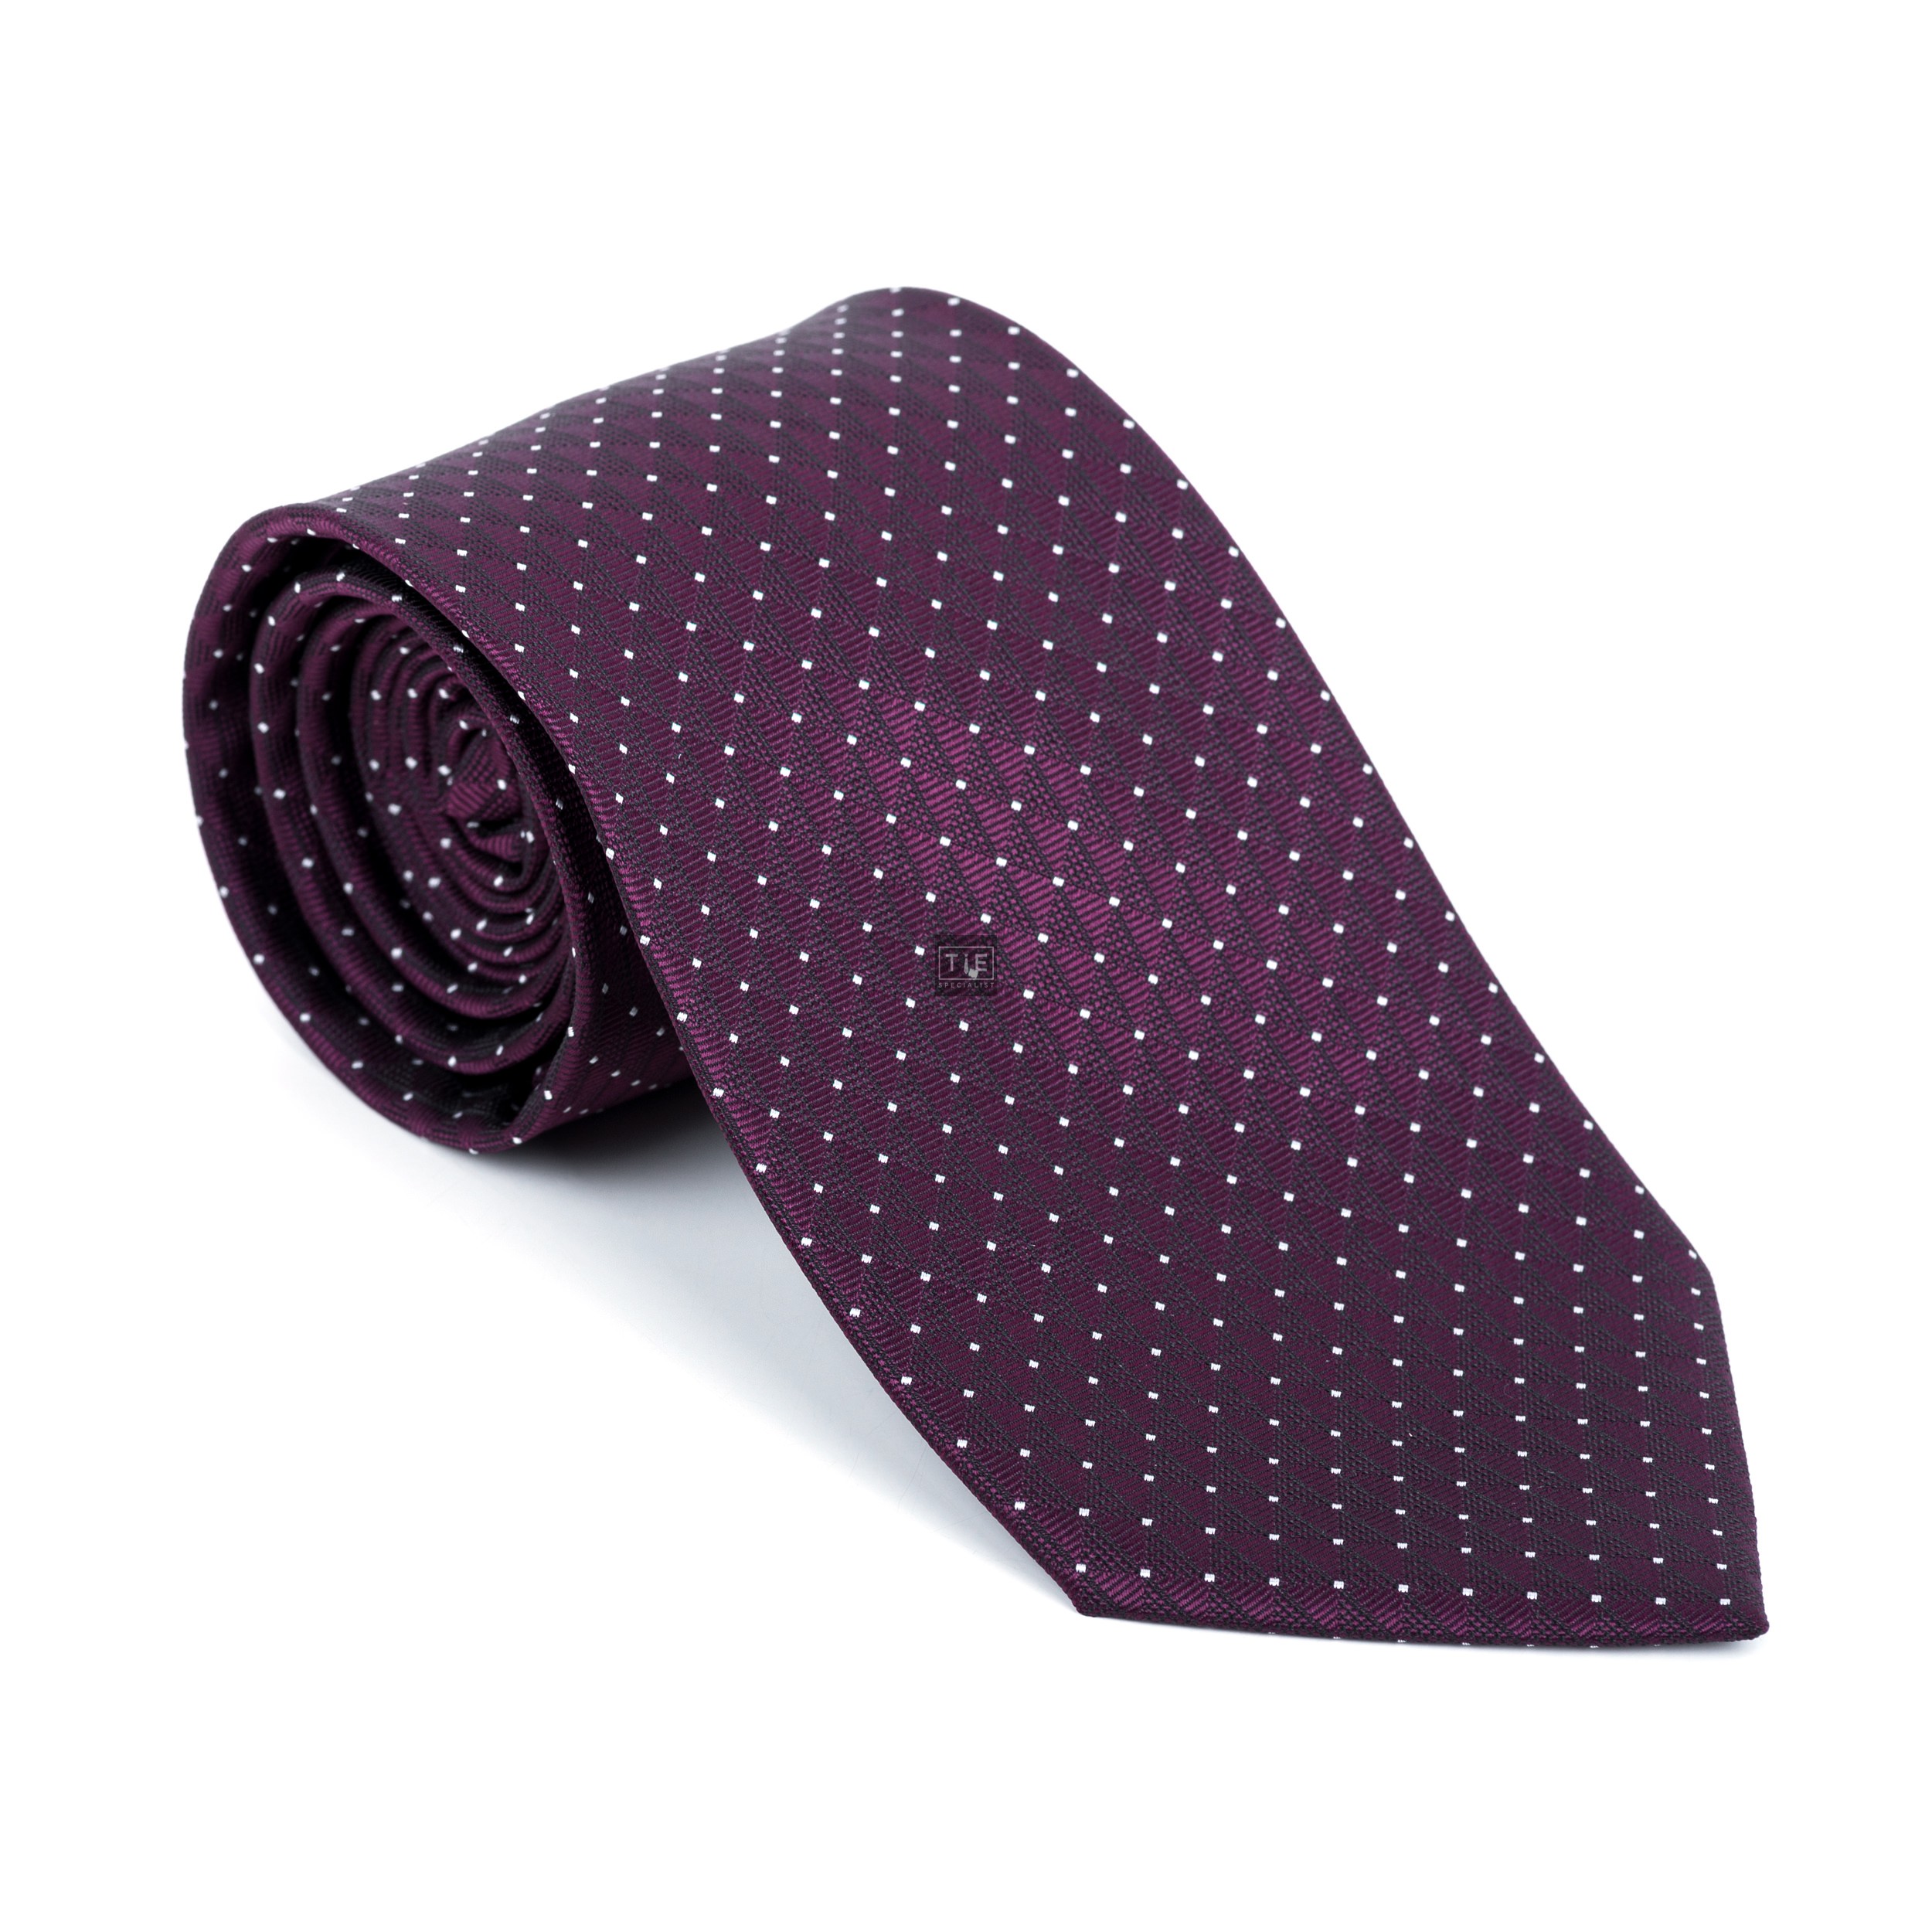 Fine Polka Dot Formal Tie - Traditional or Slim Width